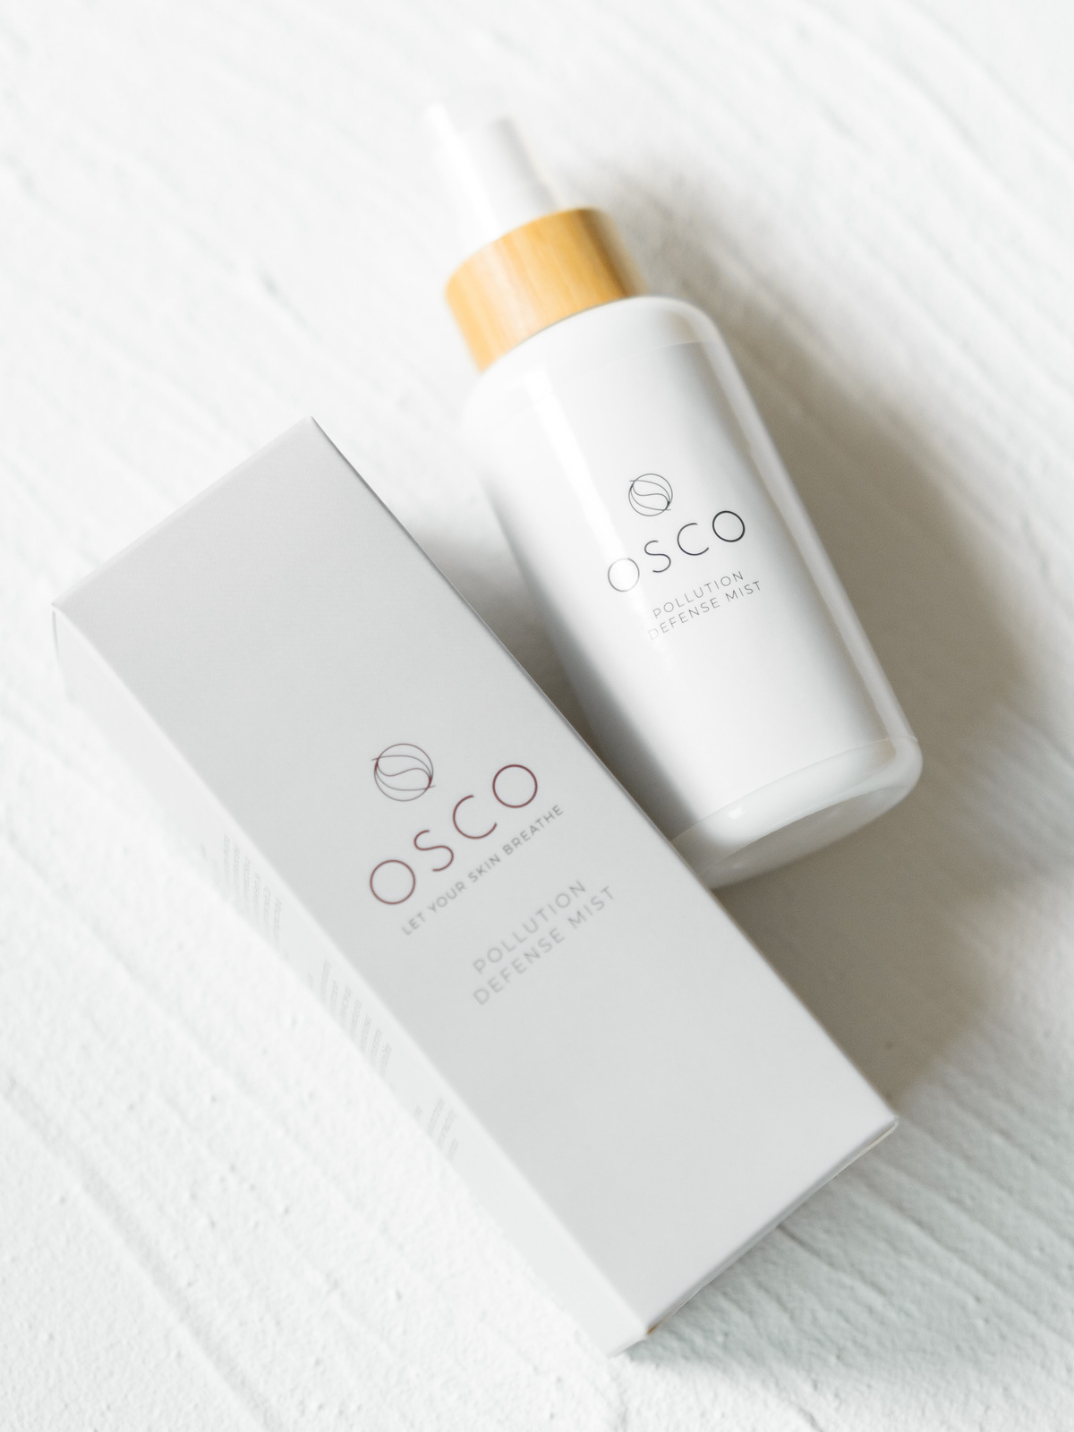 pollution defense mist OSCO natural skincare